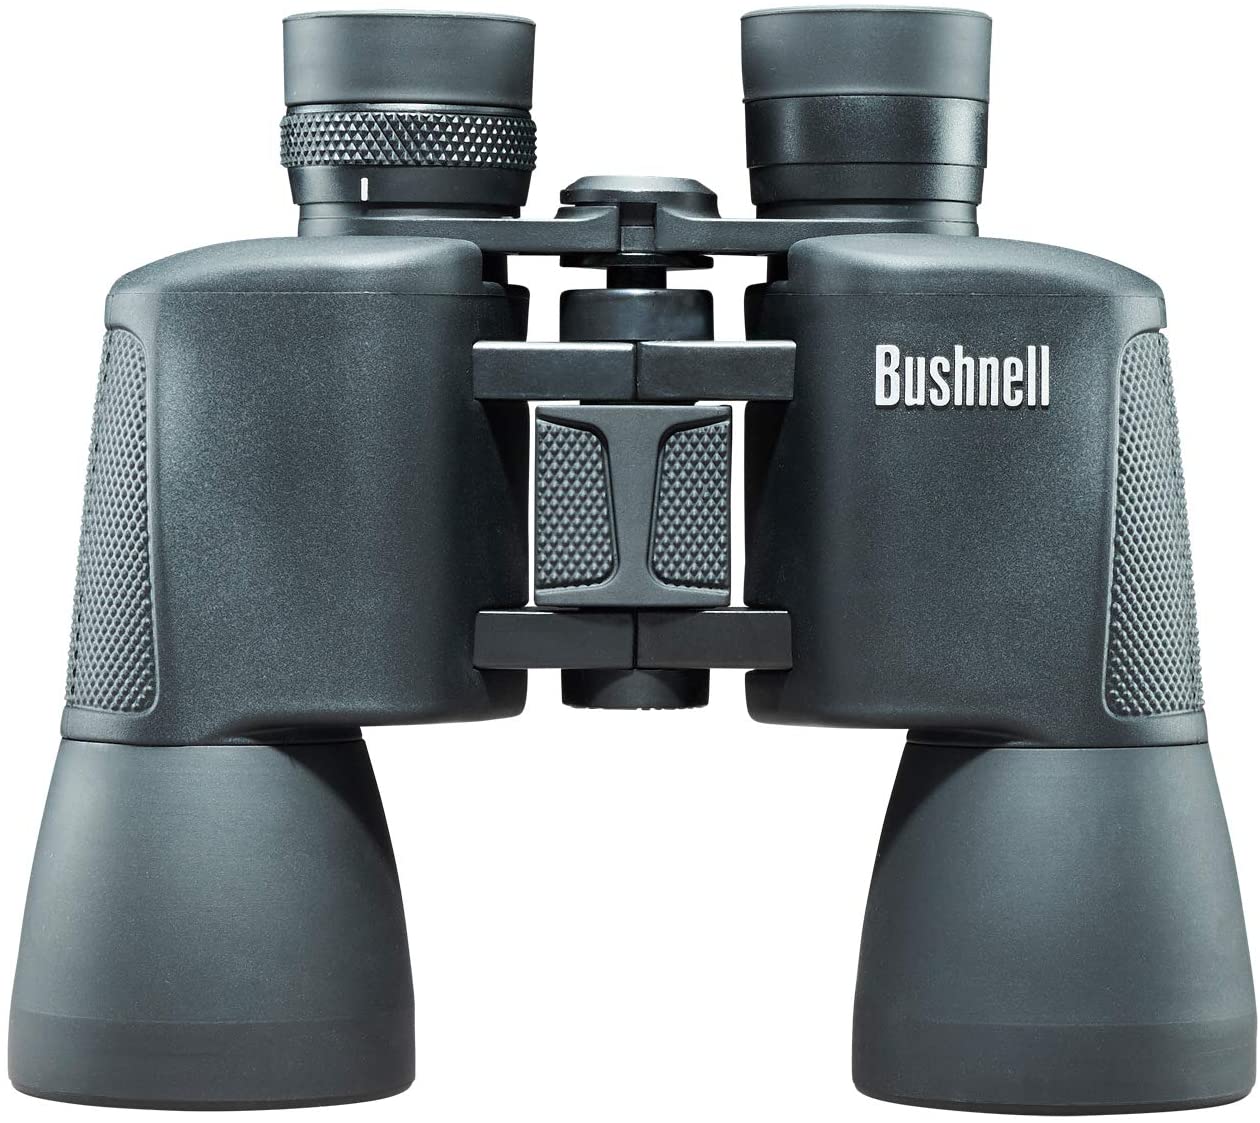 Bushnell Powerview Wide Angle Binocular, Porro Prism Glass BK-7 - BH131056